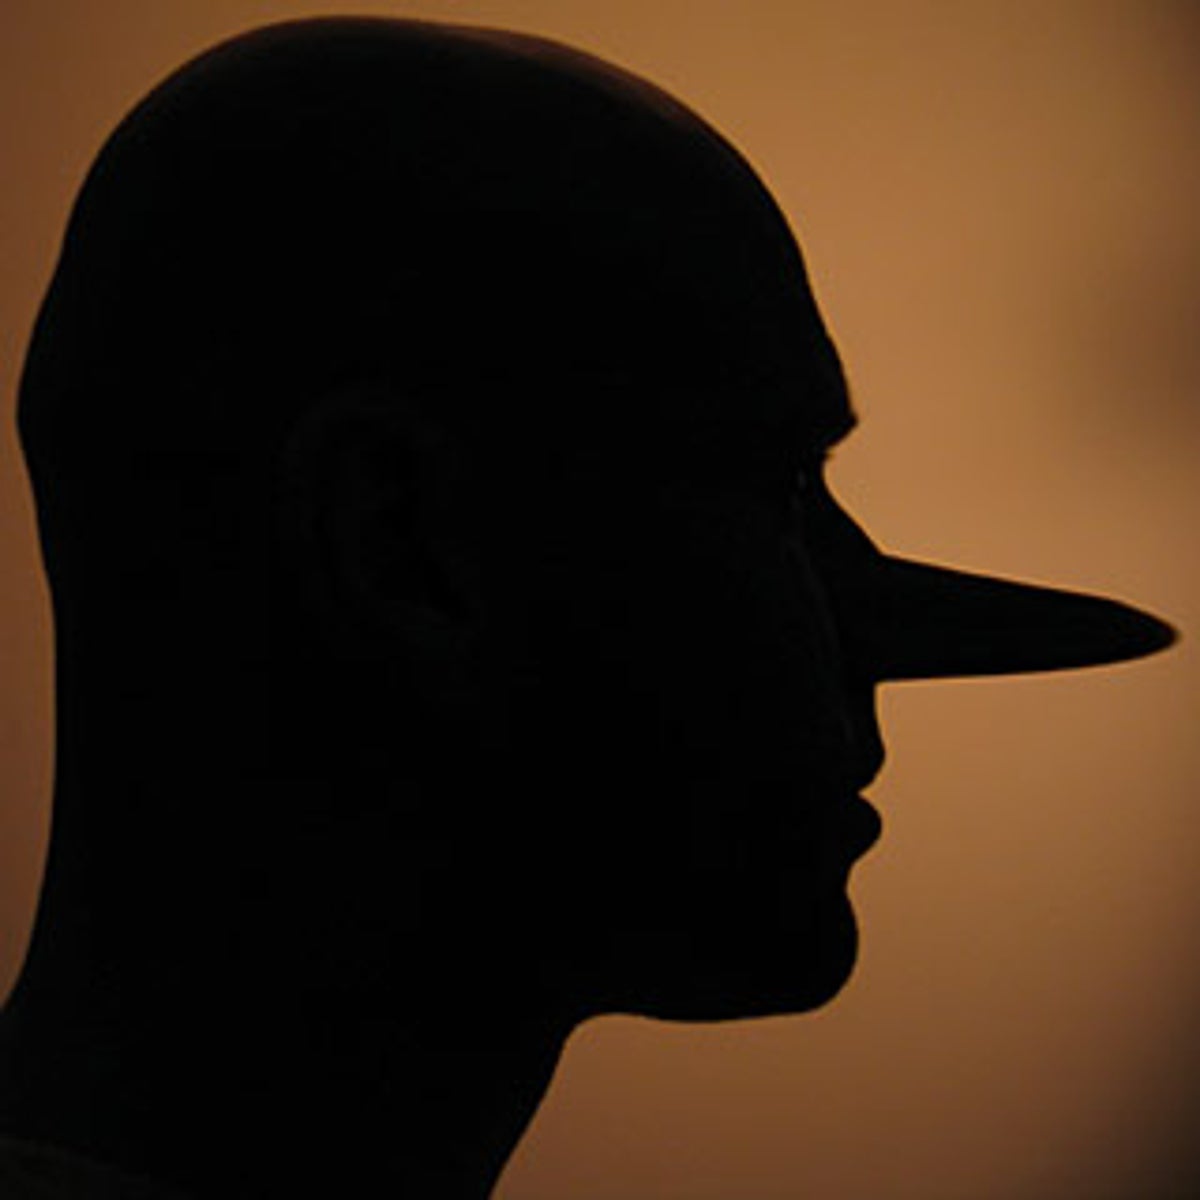 Science Mind Expert Analysis Man Dark Silhouette Stock Image - Image of  exposure, portrait: 224058155